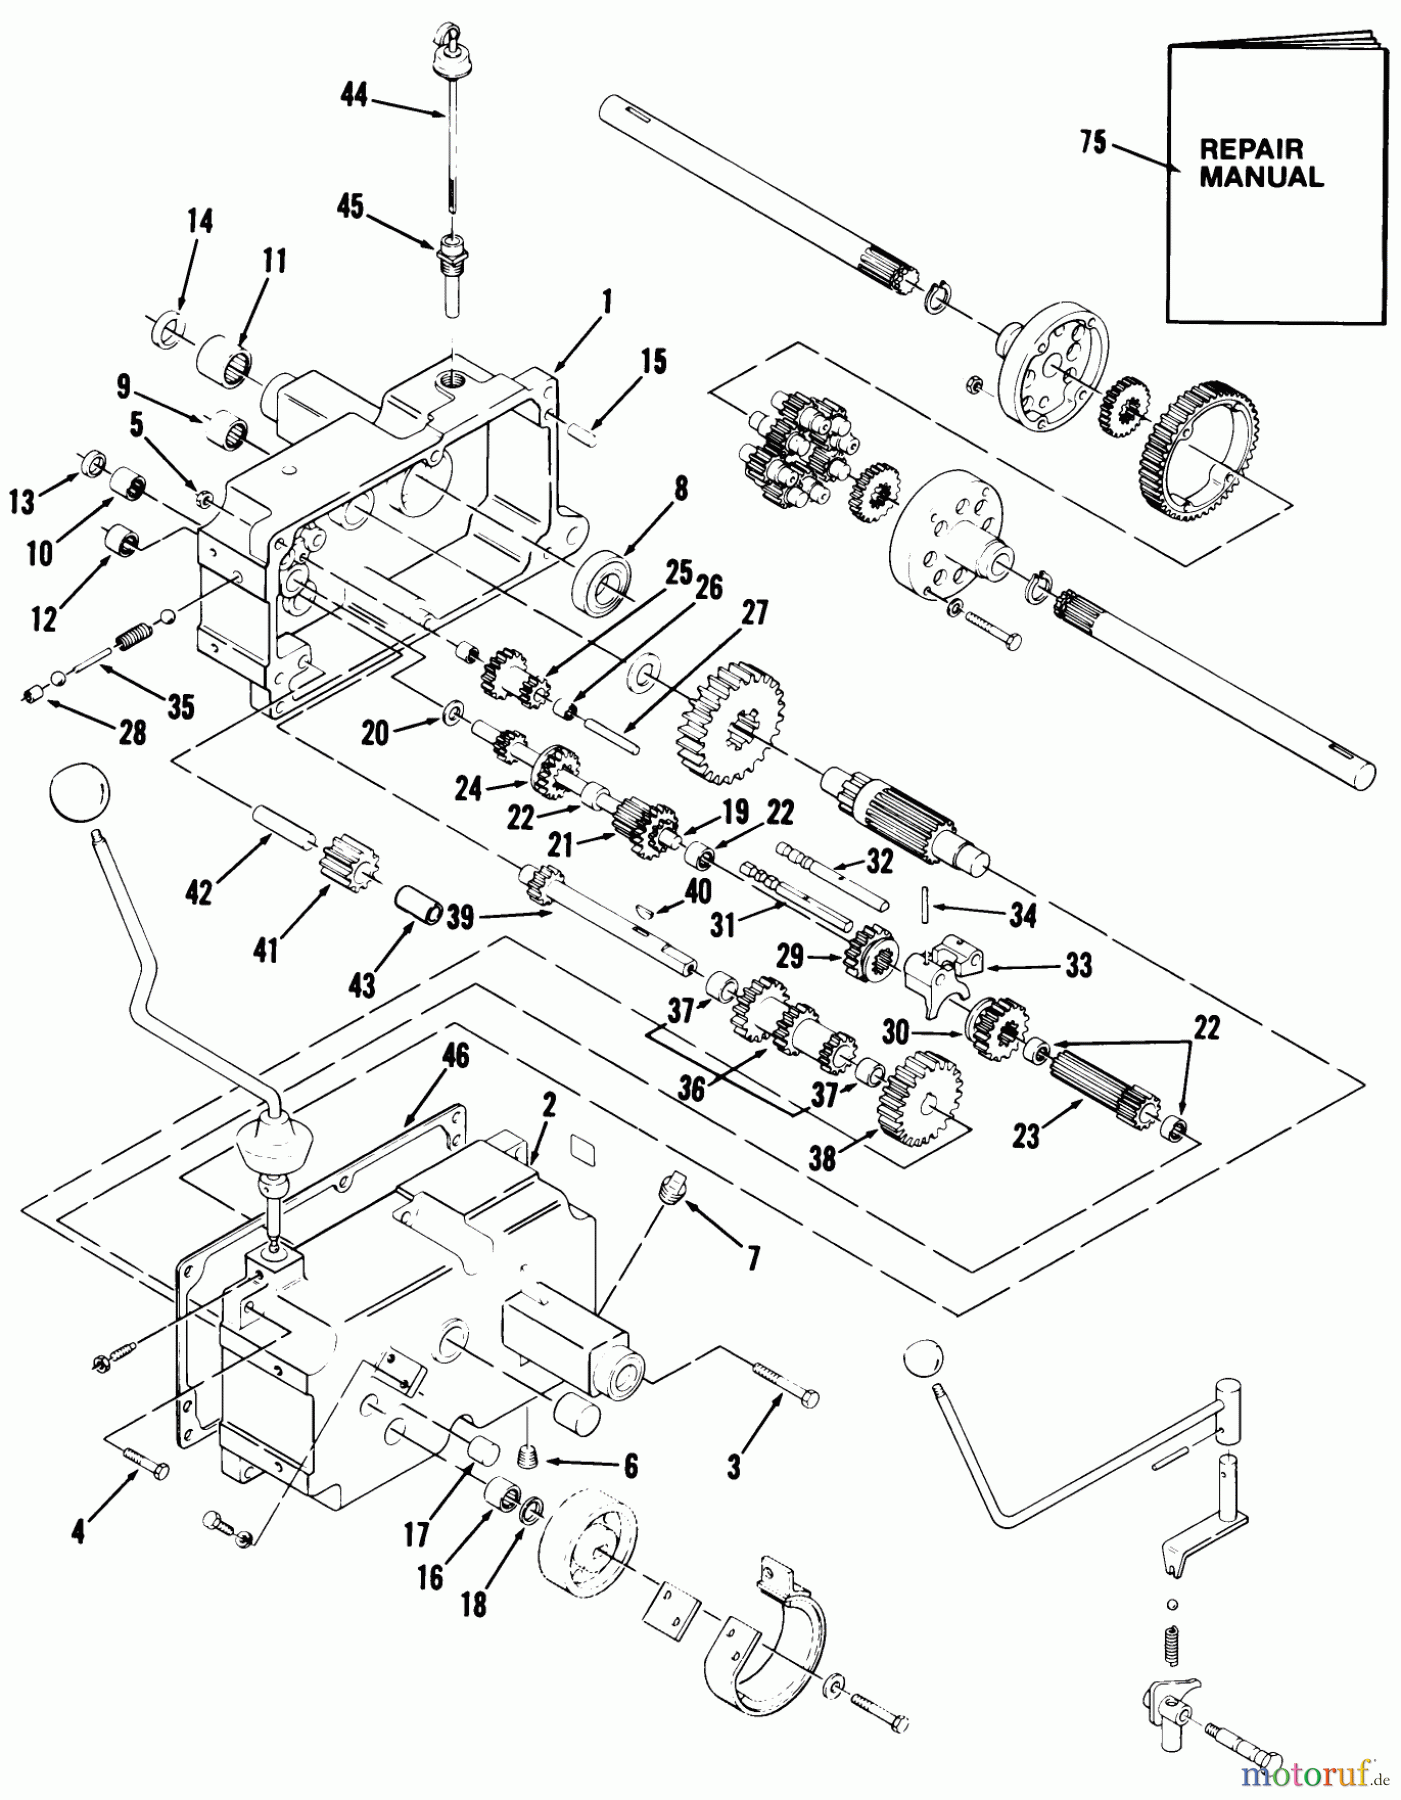  Toro Neu Mowers, Lawn & Garden Tractor Seite 1 11-17KE01 (C-175) - Toro C-175 Twin Automatic Tractor, 1984 MECHANICAL TRANSMISSION-8-SPEED #1